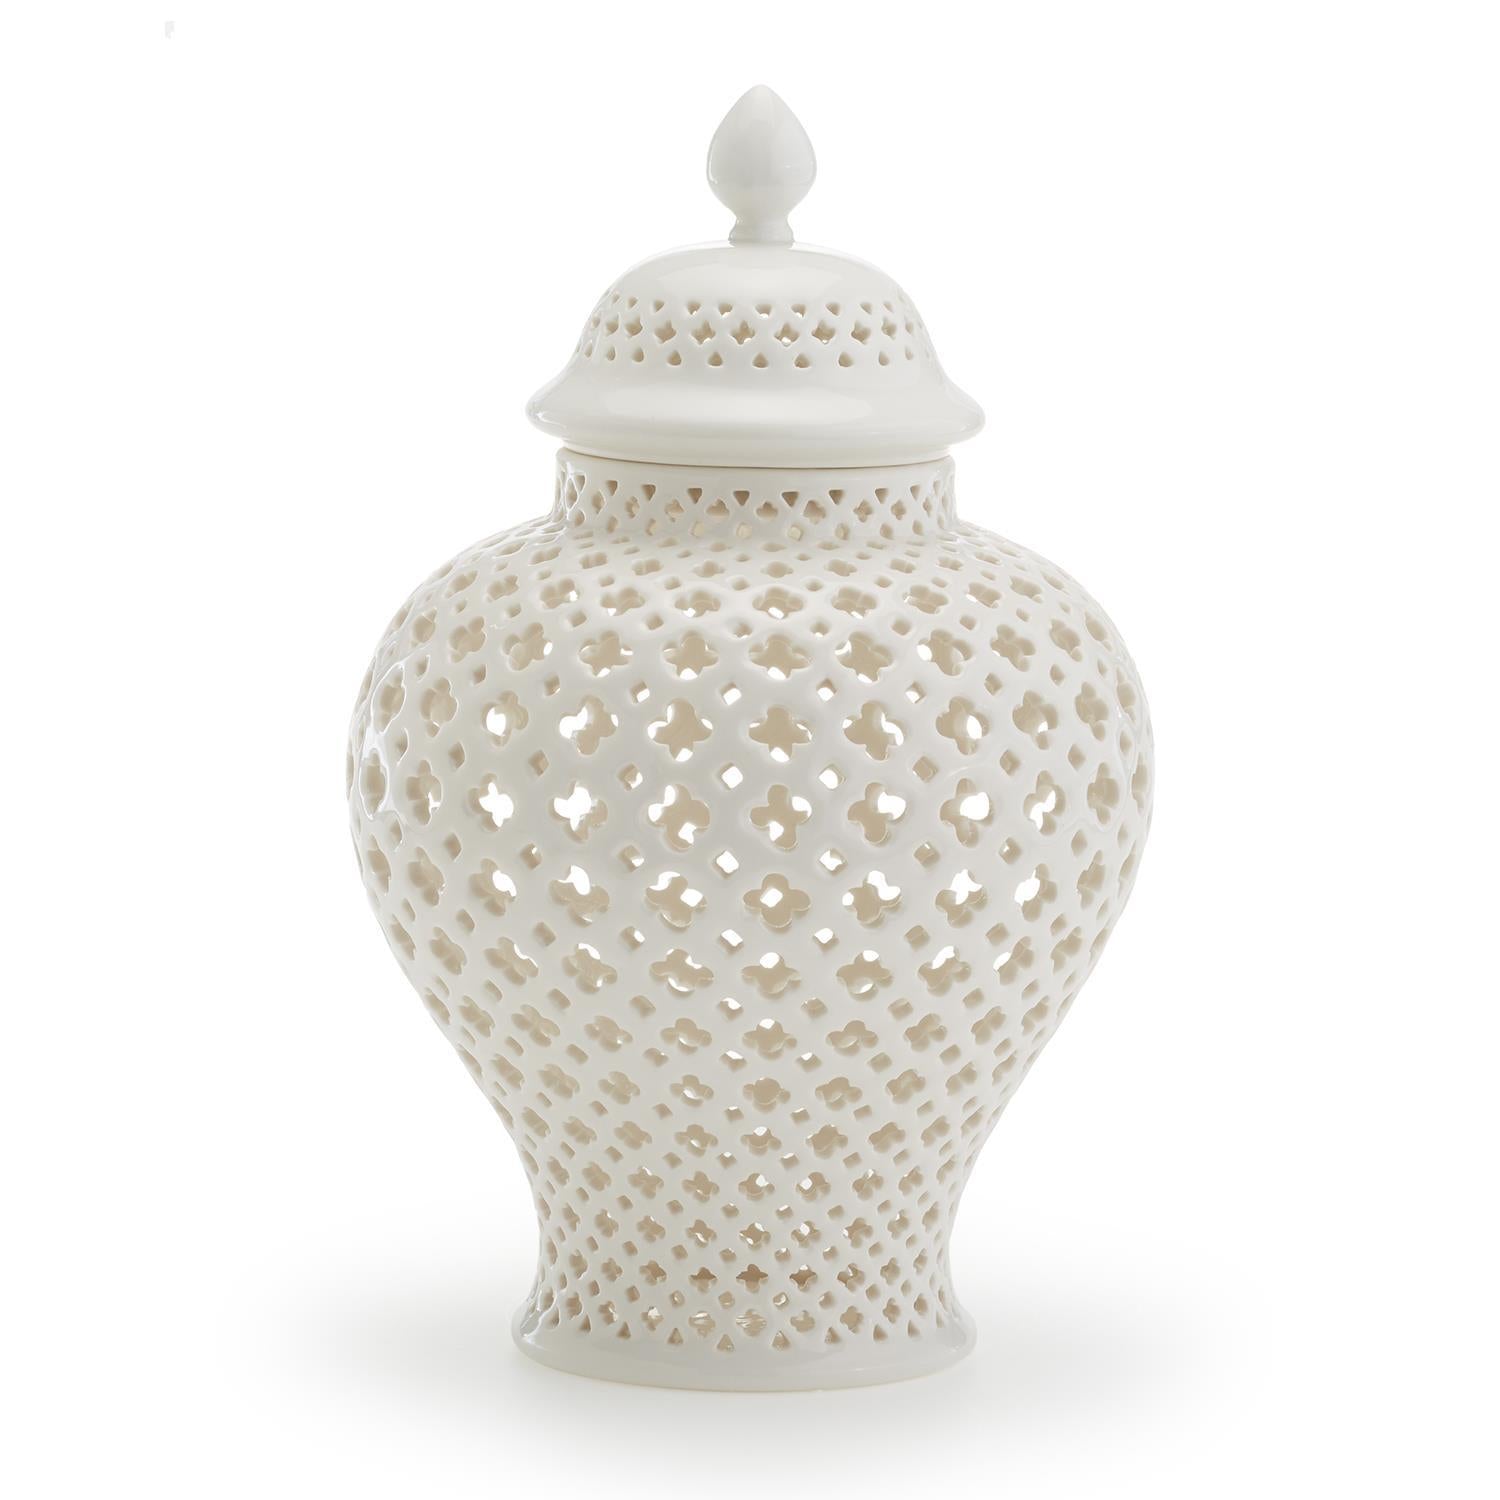 Two's Company Carthage Medium Pierced Covered Lantern - Porcelain